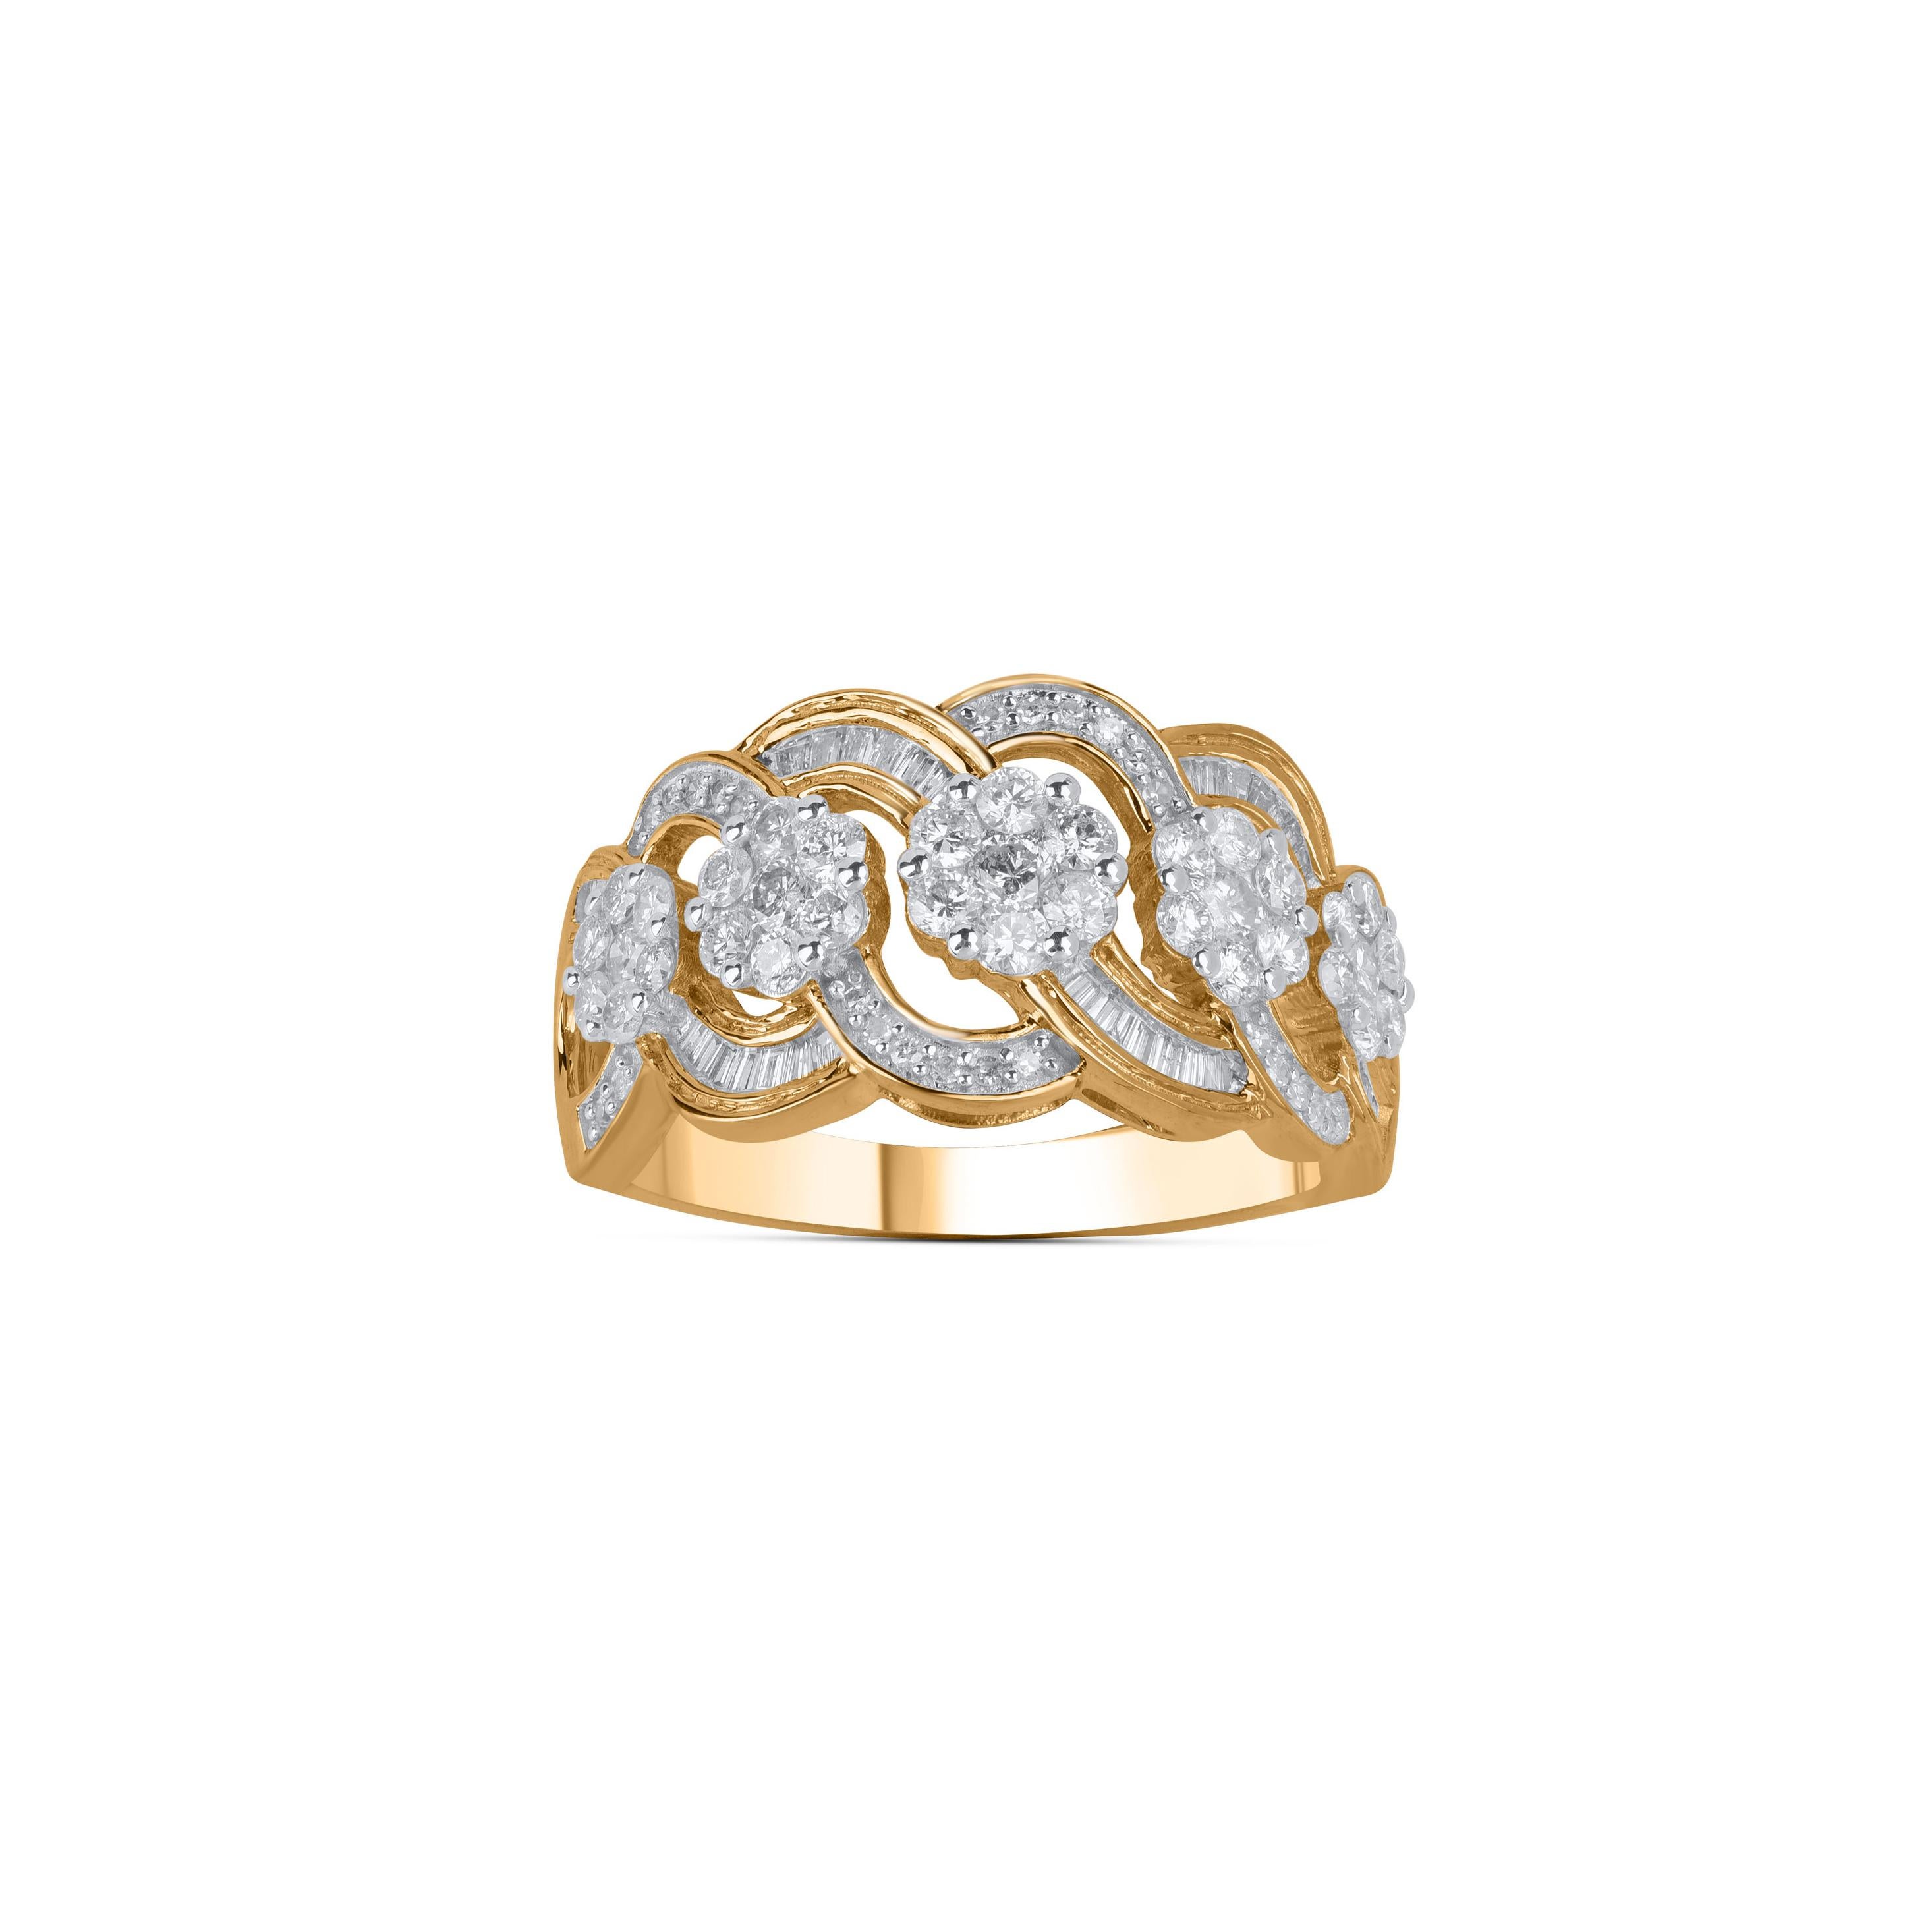 10 karat diamond ring